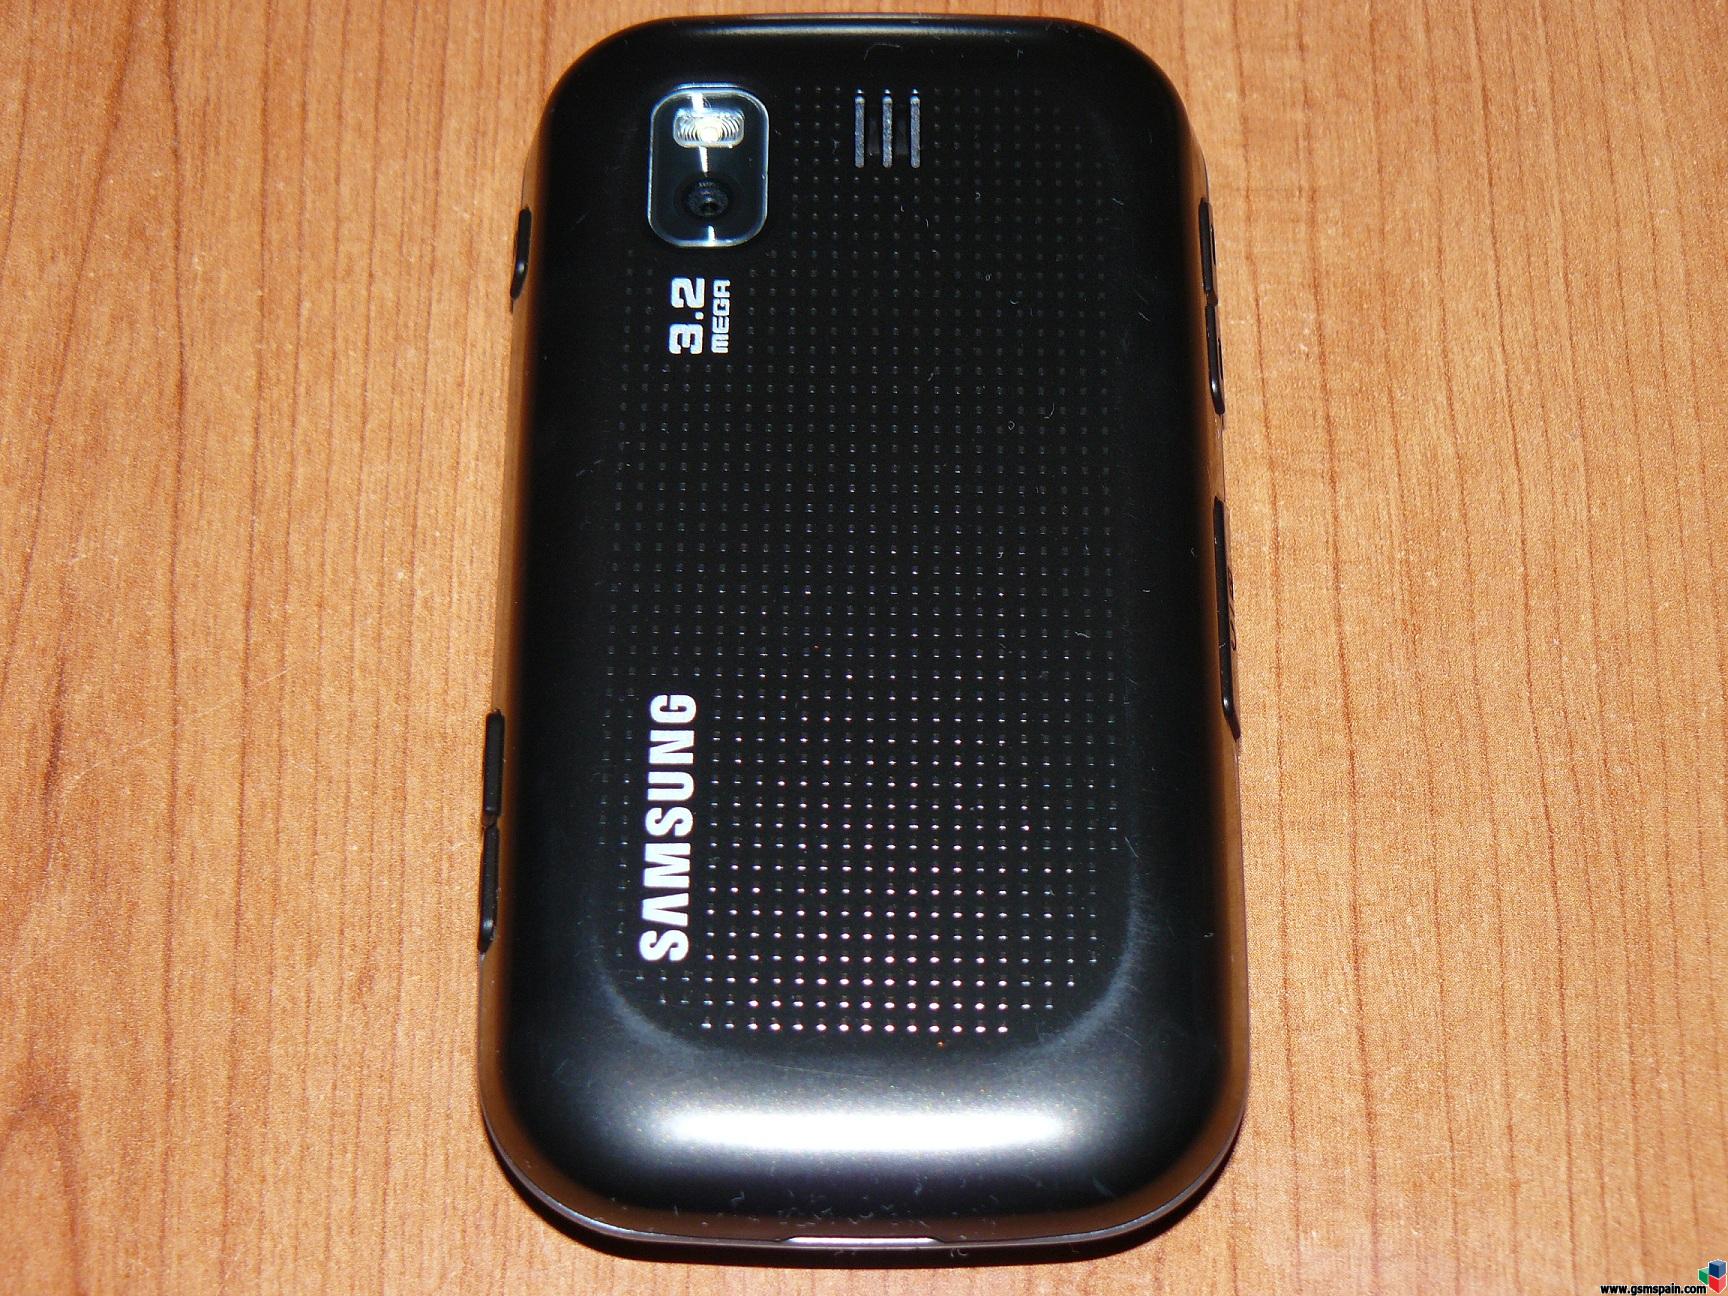 ^_^***Samsung GT-B5722 dual sim***^_^